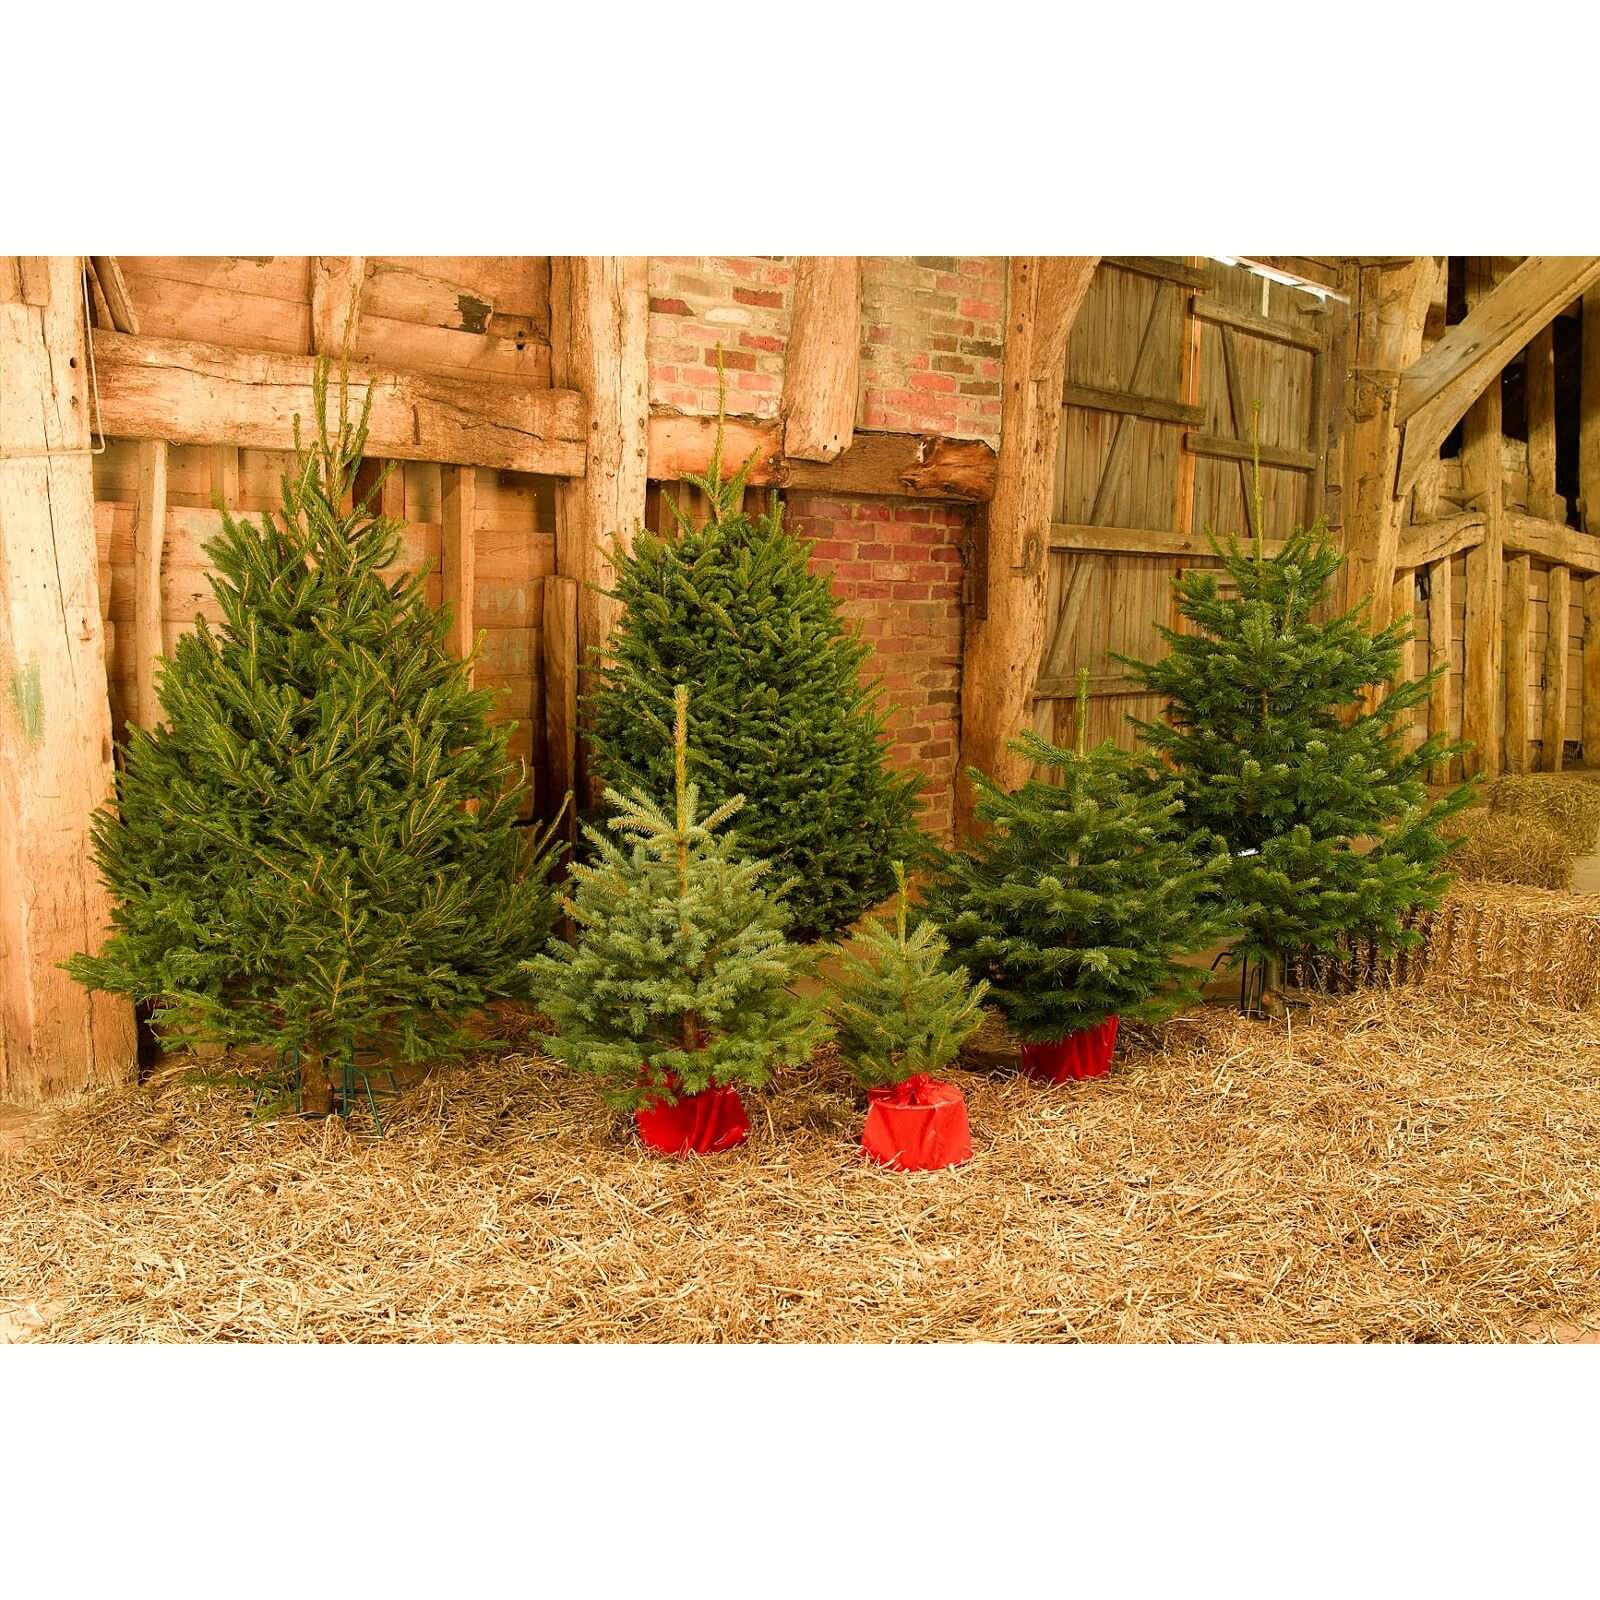 180cm+ (6ft+) Real Cut Fraser Fir Christmas Tree